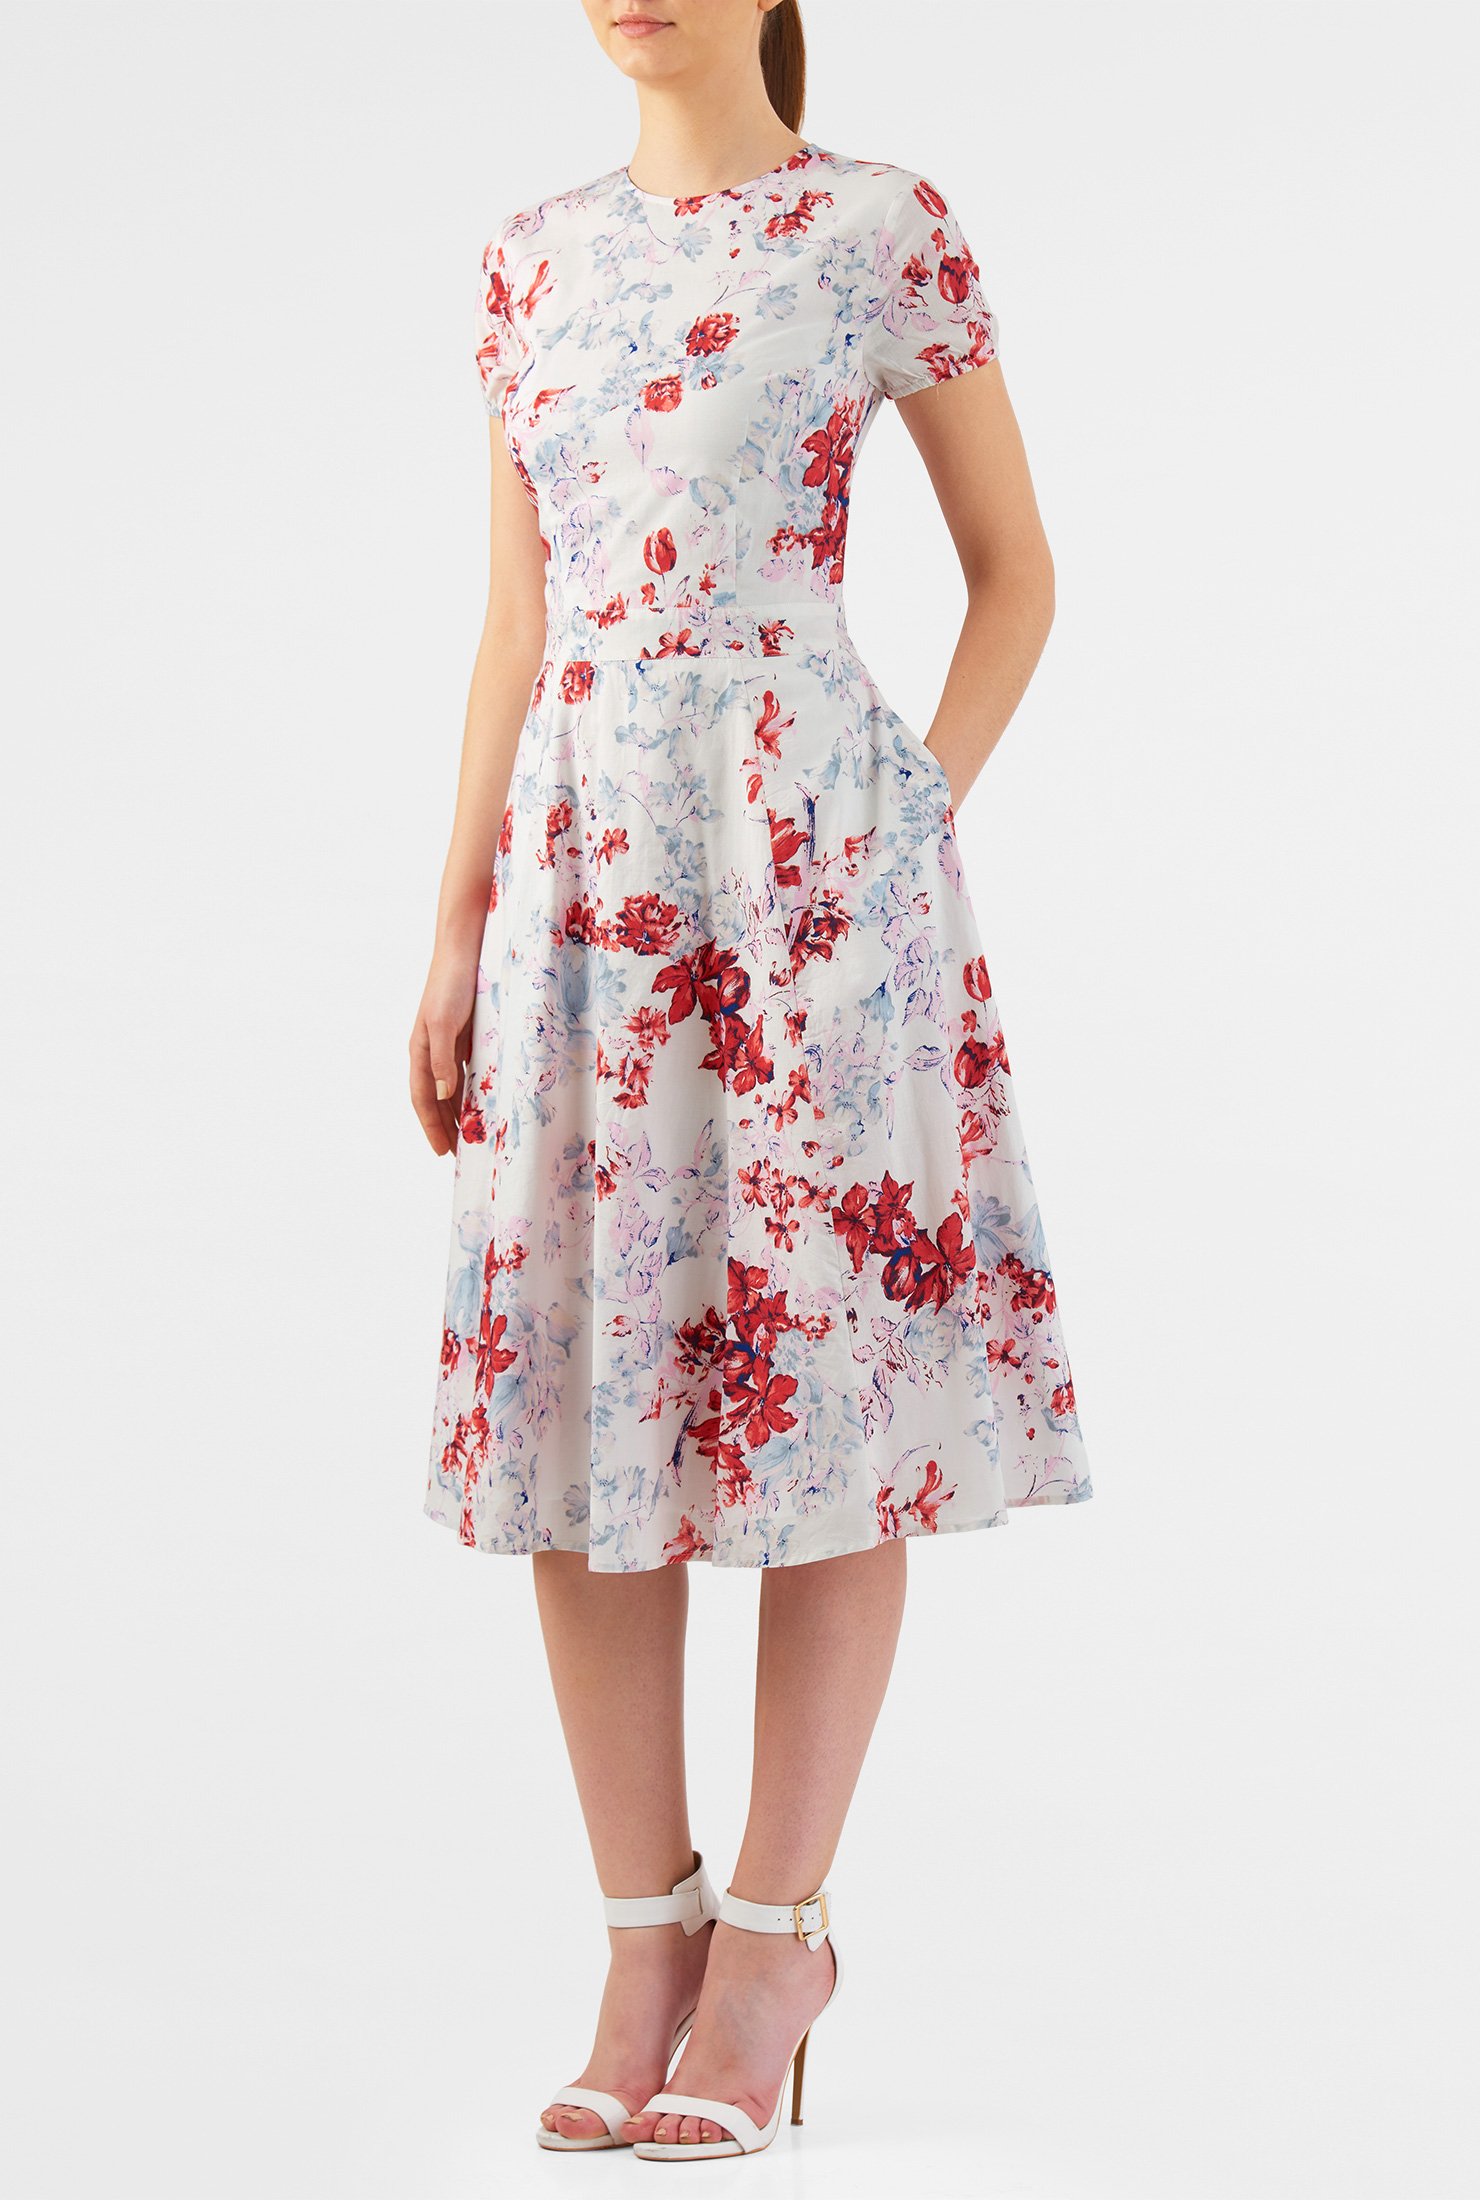 Shop Floral print fit-and-flare cambric dress | eShakti